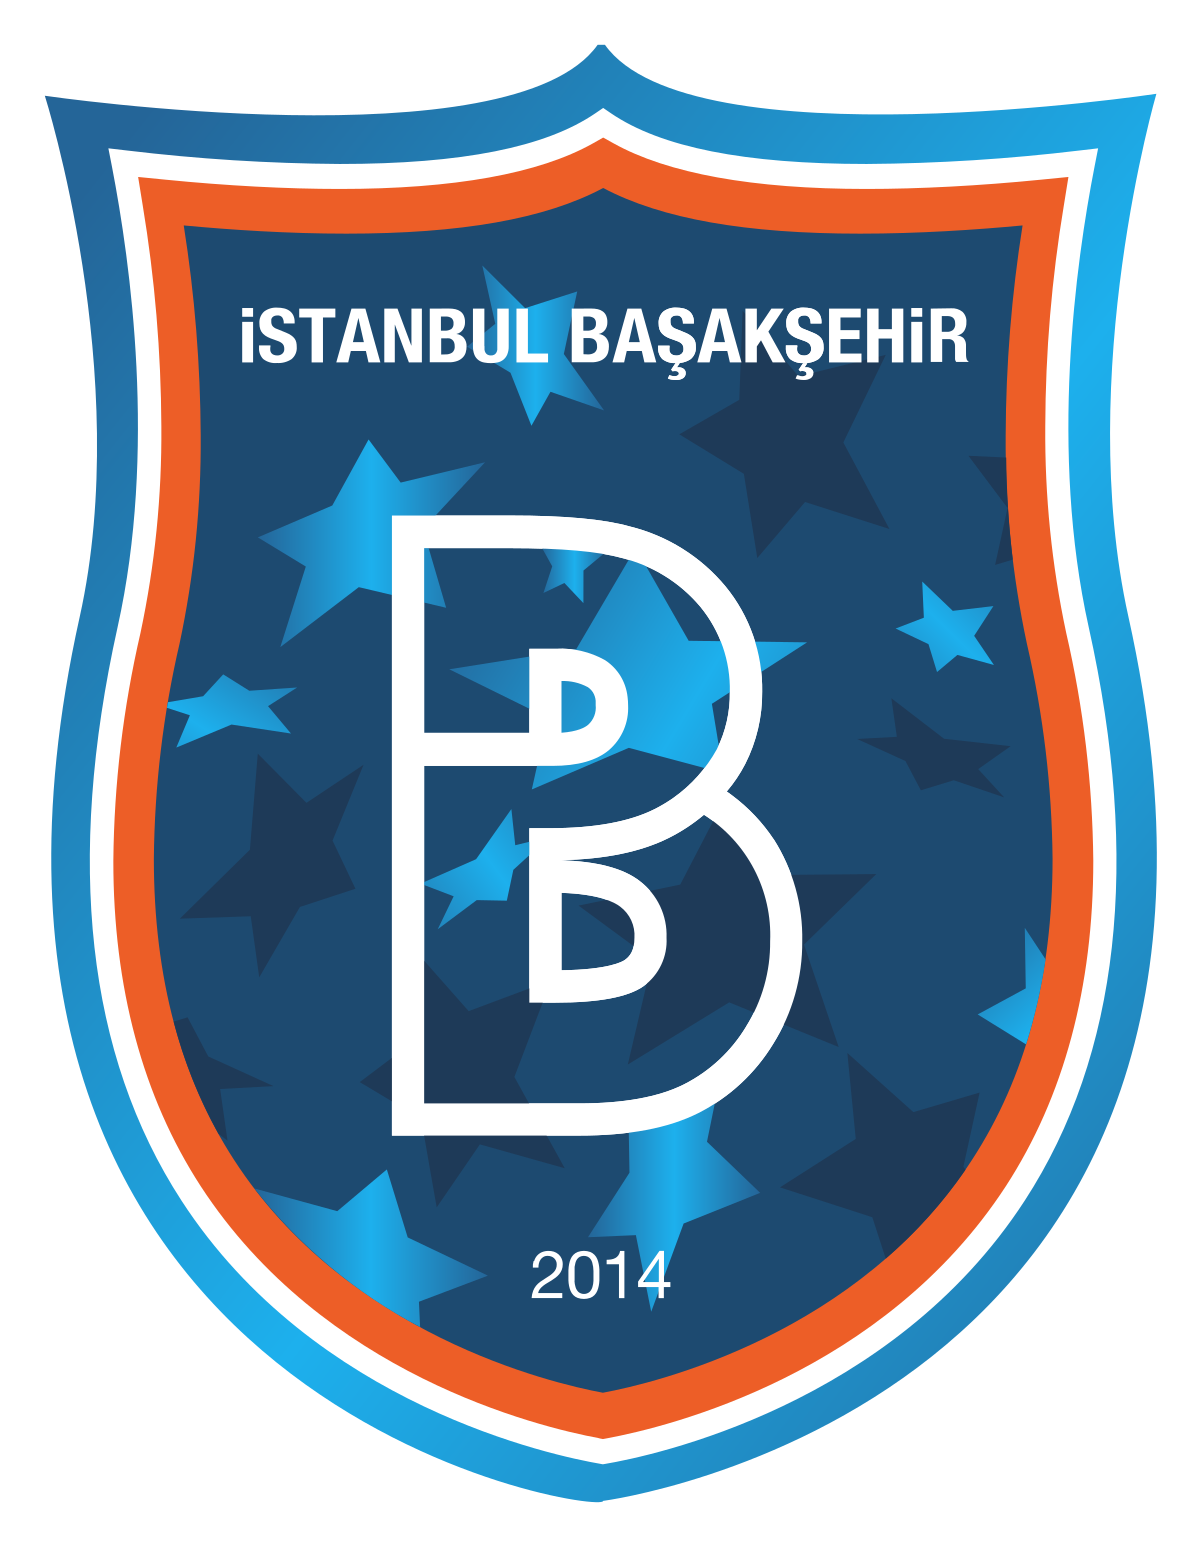 Istanbul Basaksehir-2 logo